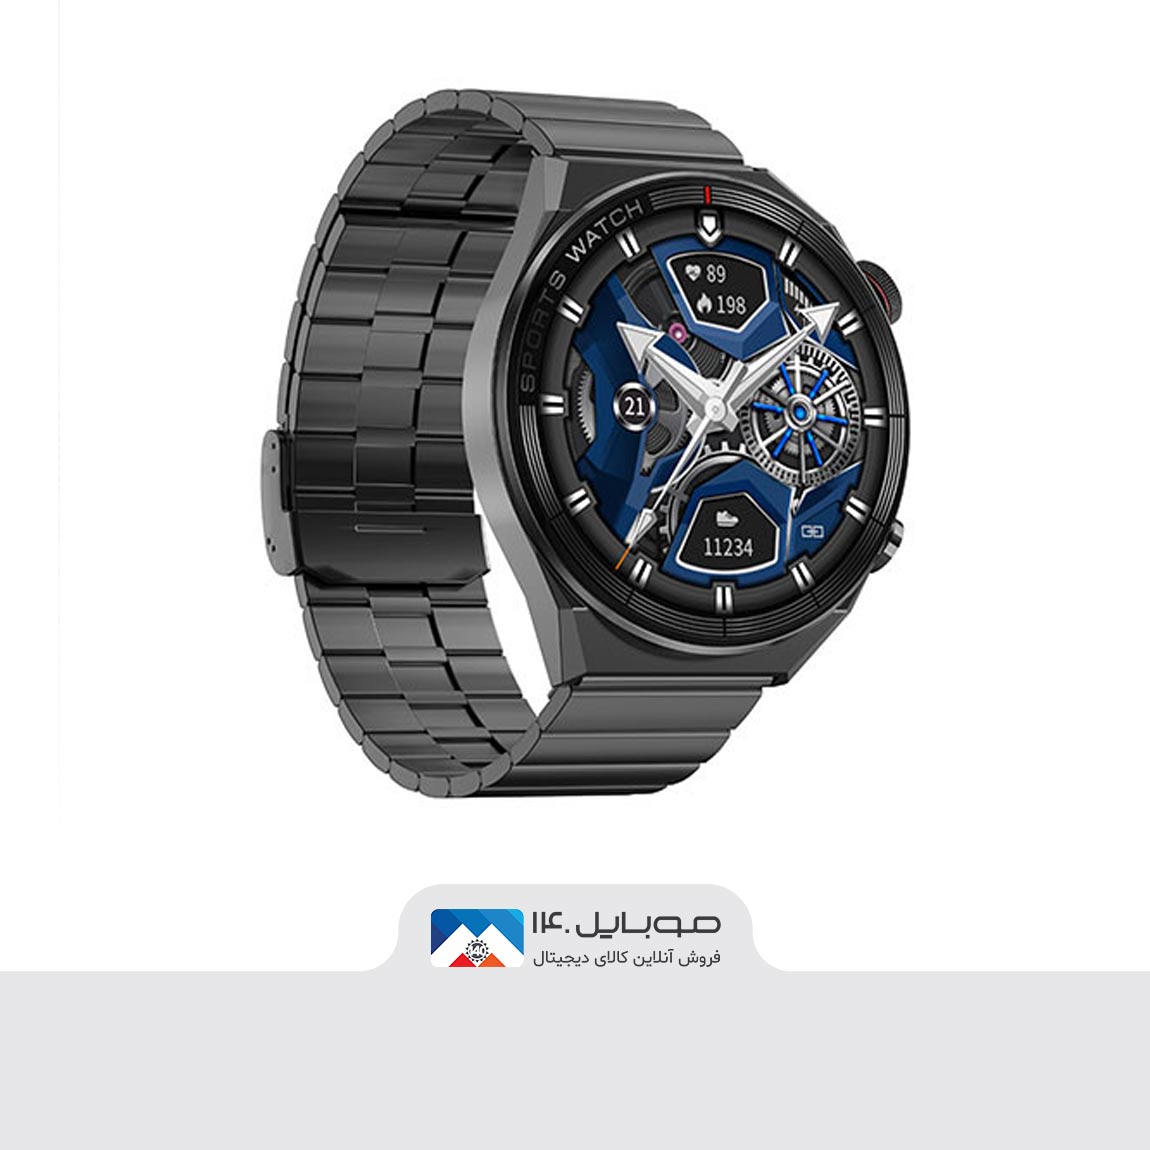 Hivami Mars Sport Smart Watch 1